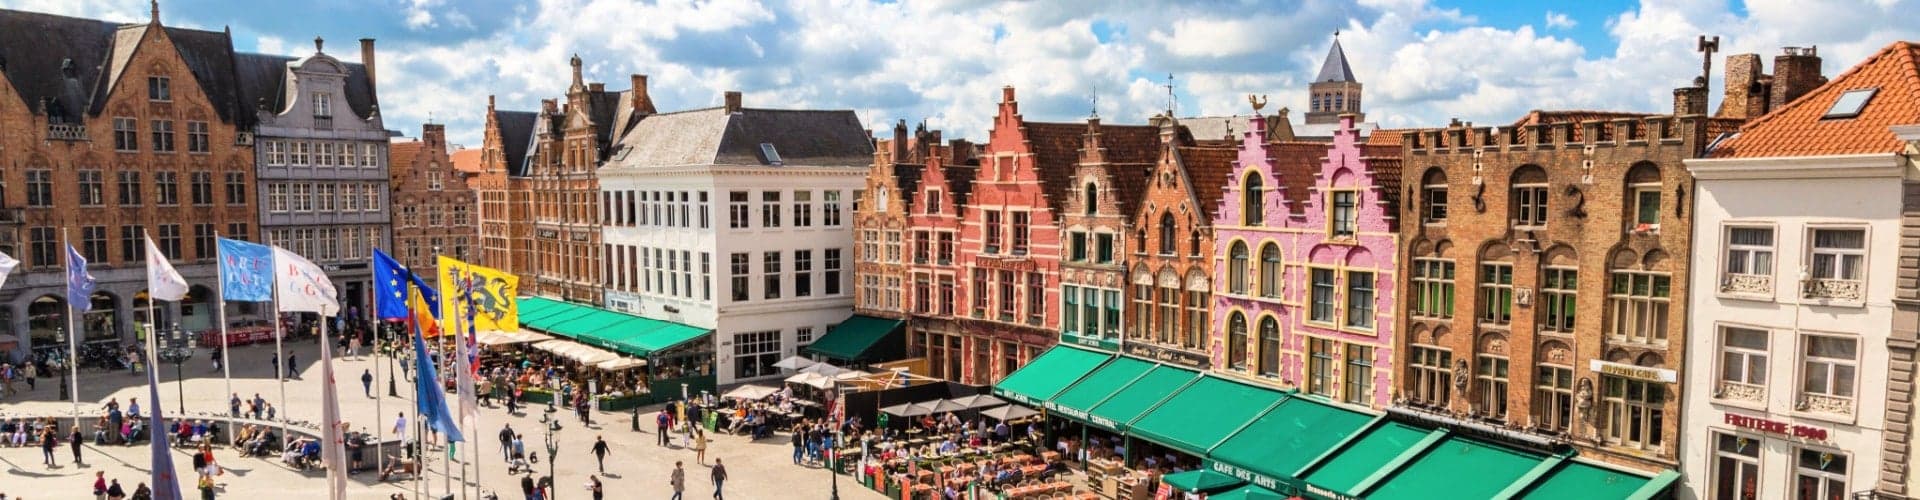 Essential Free Tour Bruges Banner